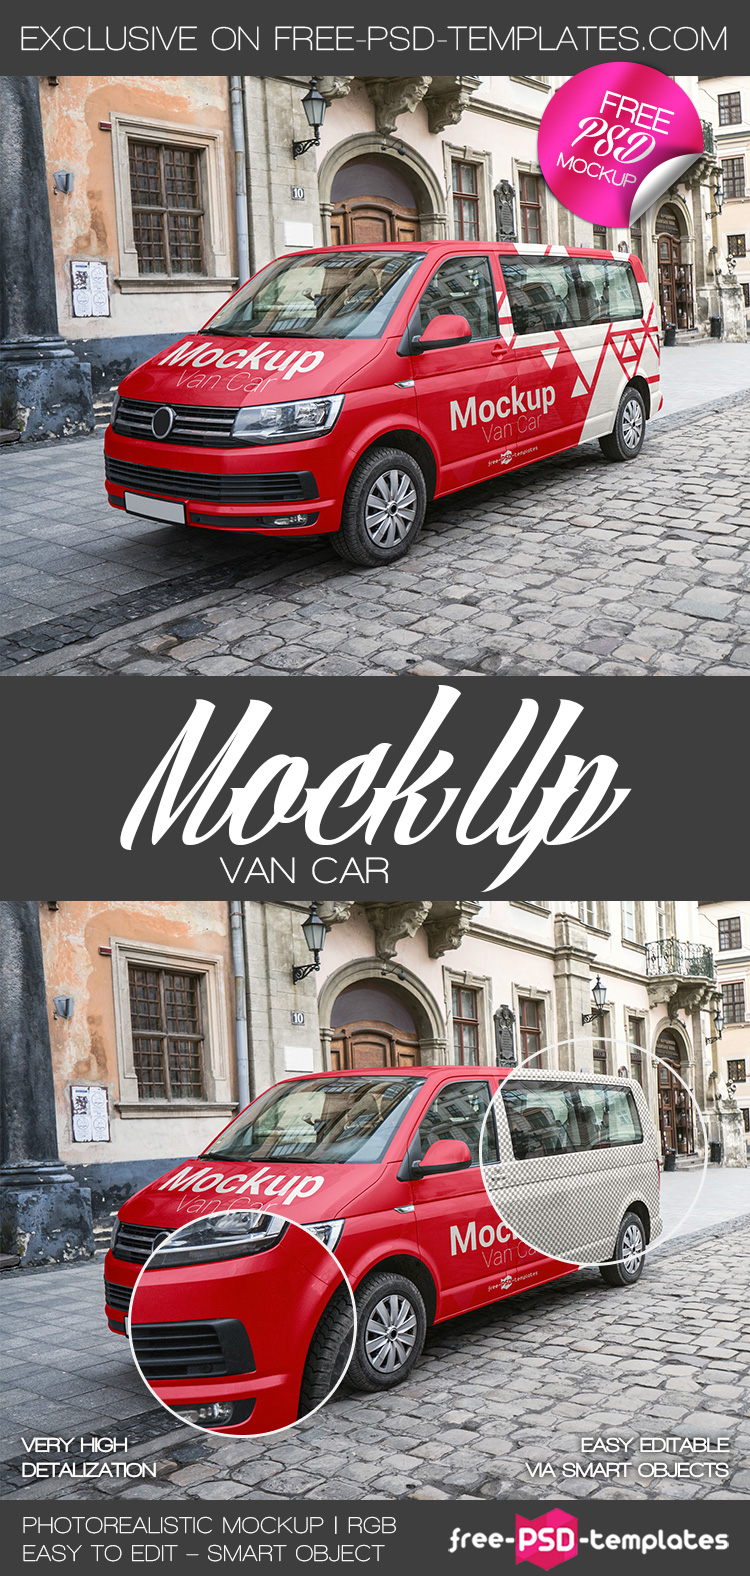 Download Free Van Car Mock Up In Psd Free Psd Templates PSD Mockup Templates